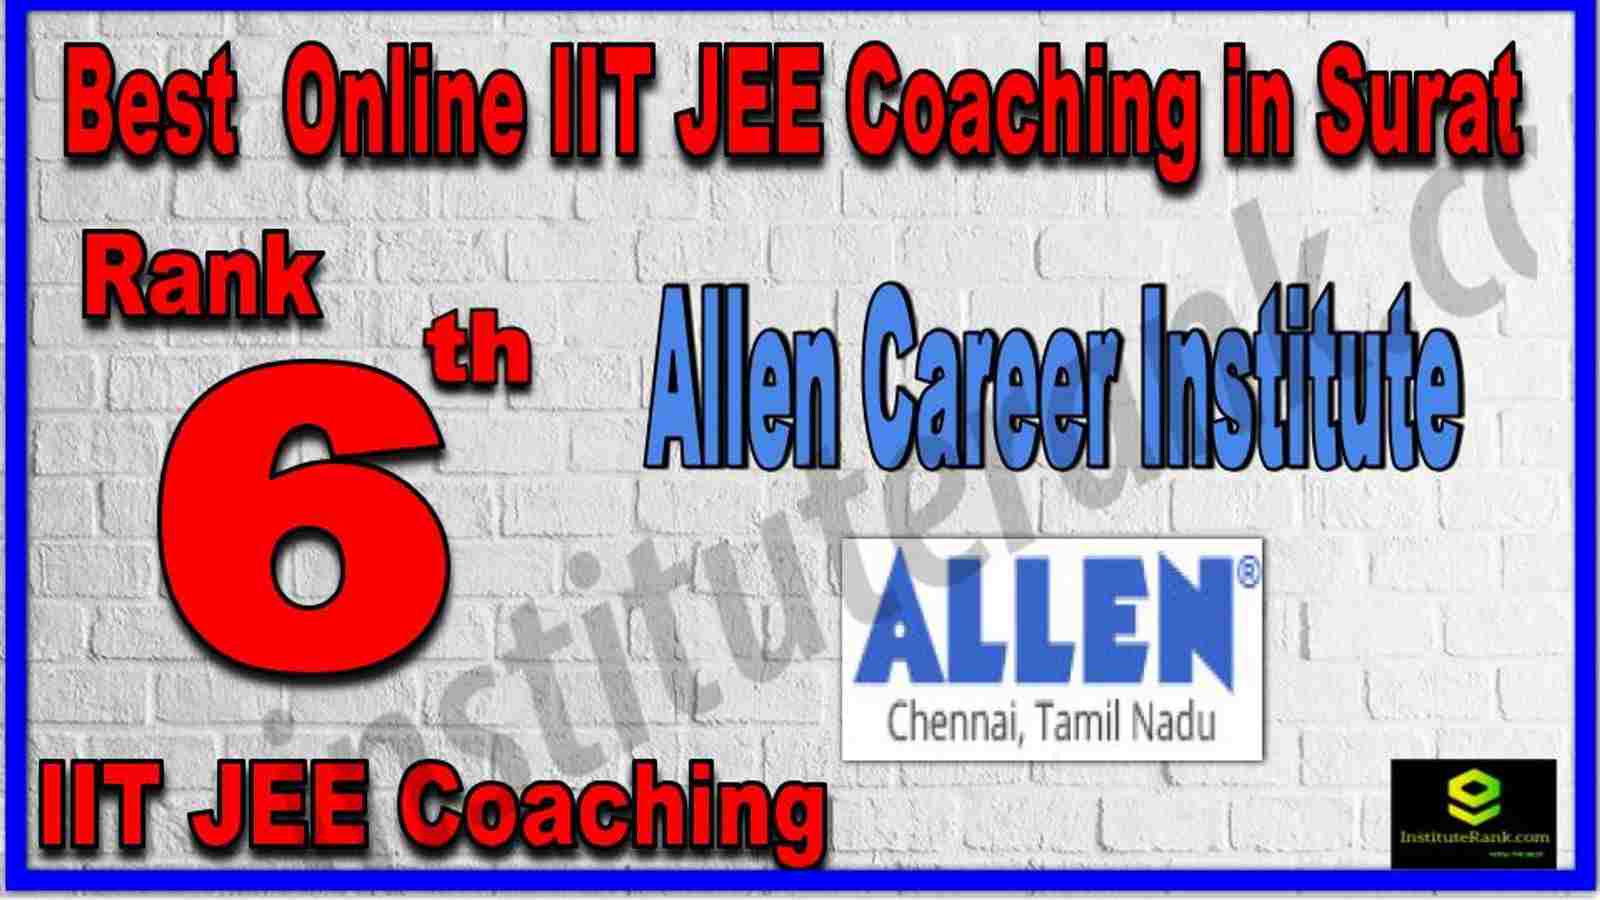 Rank 6th Best Online IIT JEE Coaching in Surat